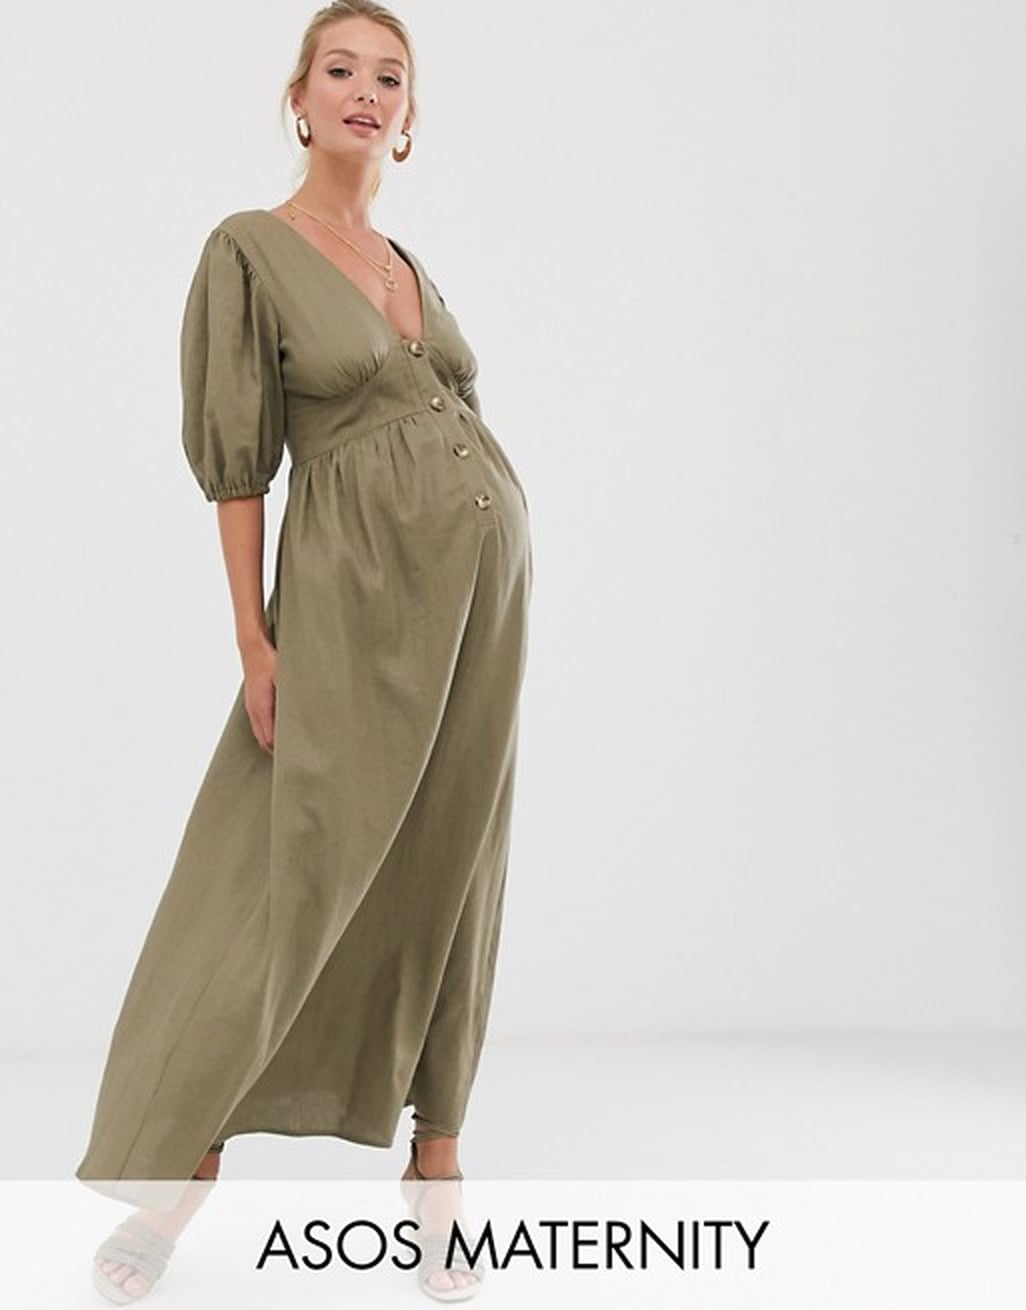 Ashley Graham Green Marina Rinaldi Maternity Dress | POPSUGAR Fashion